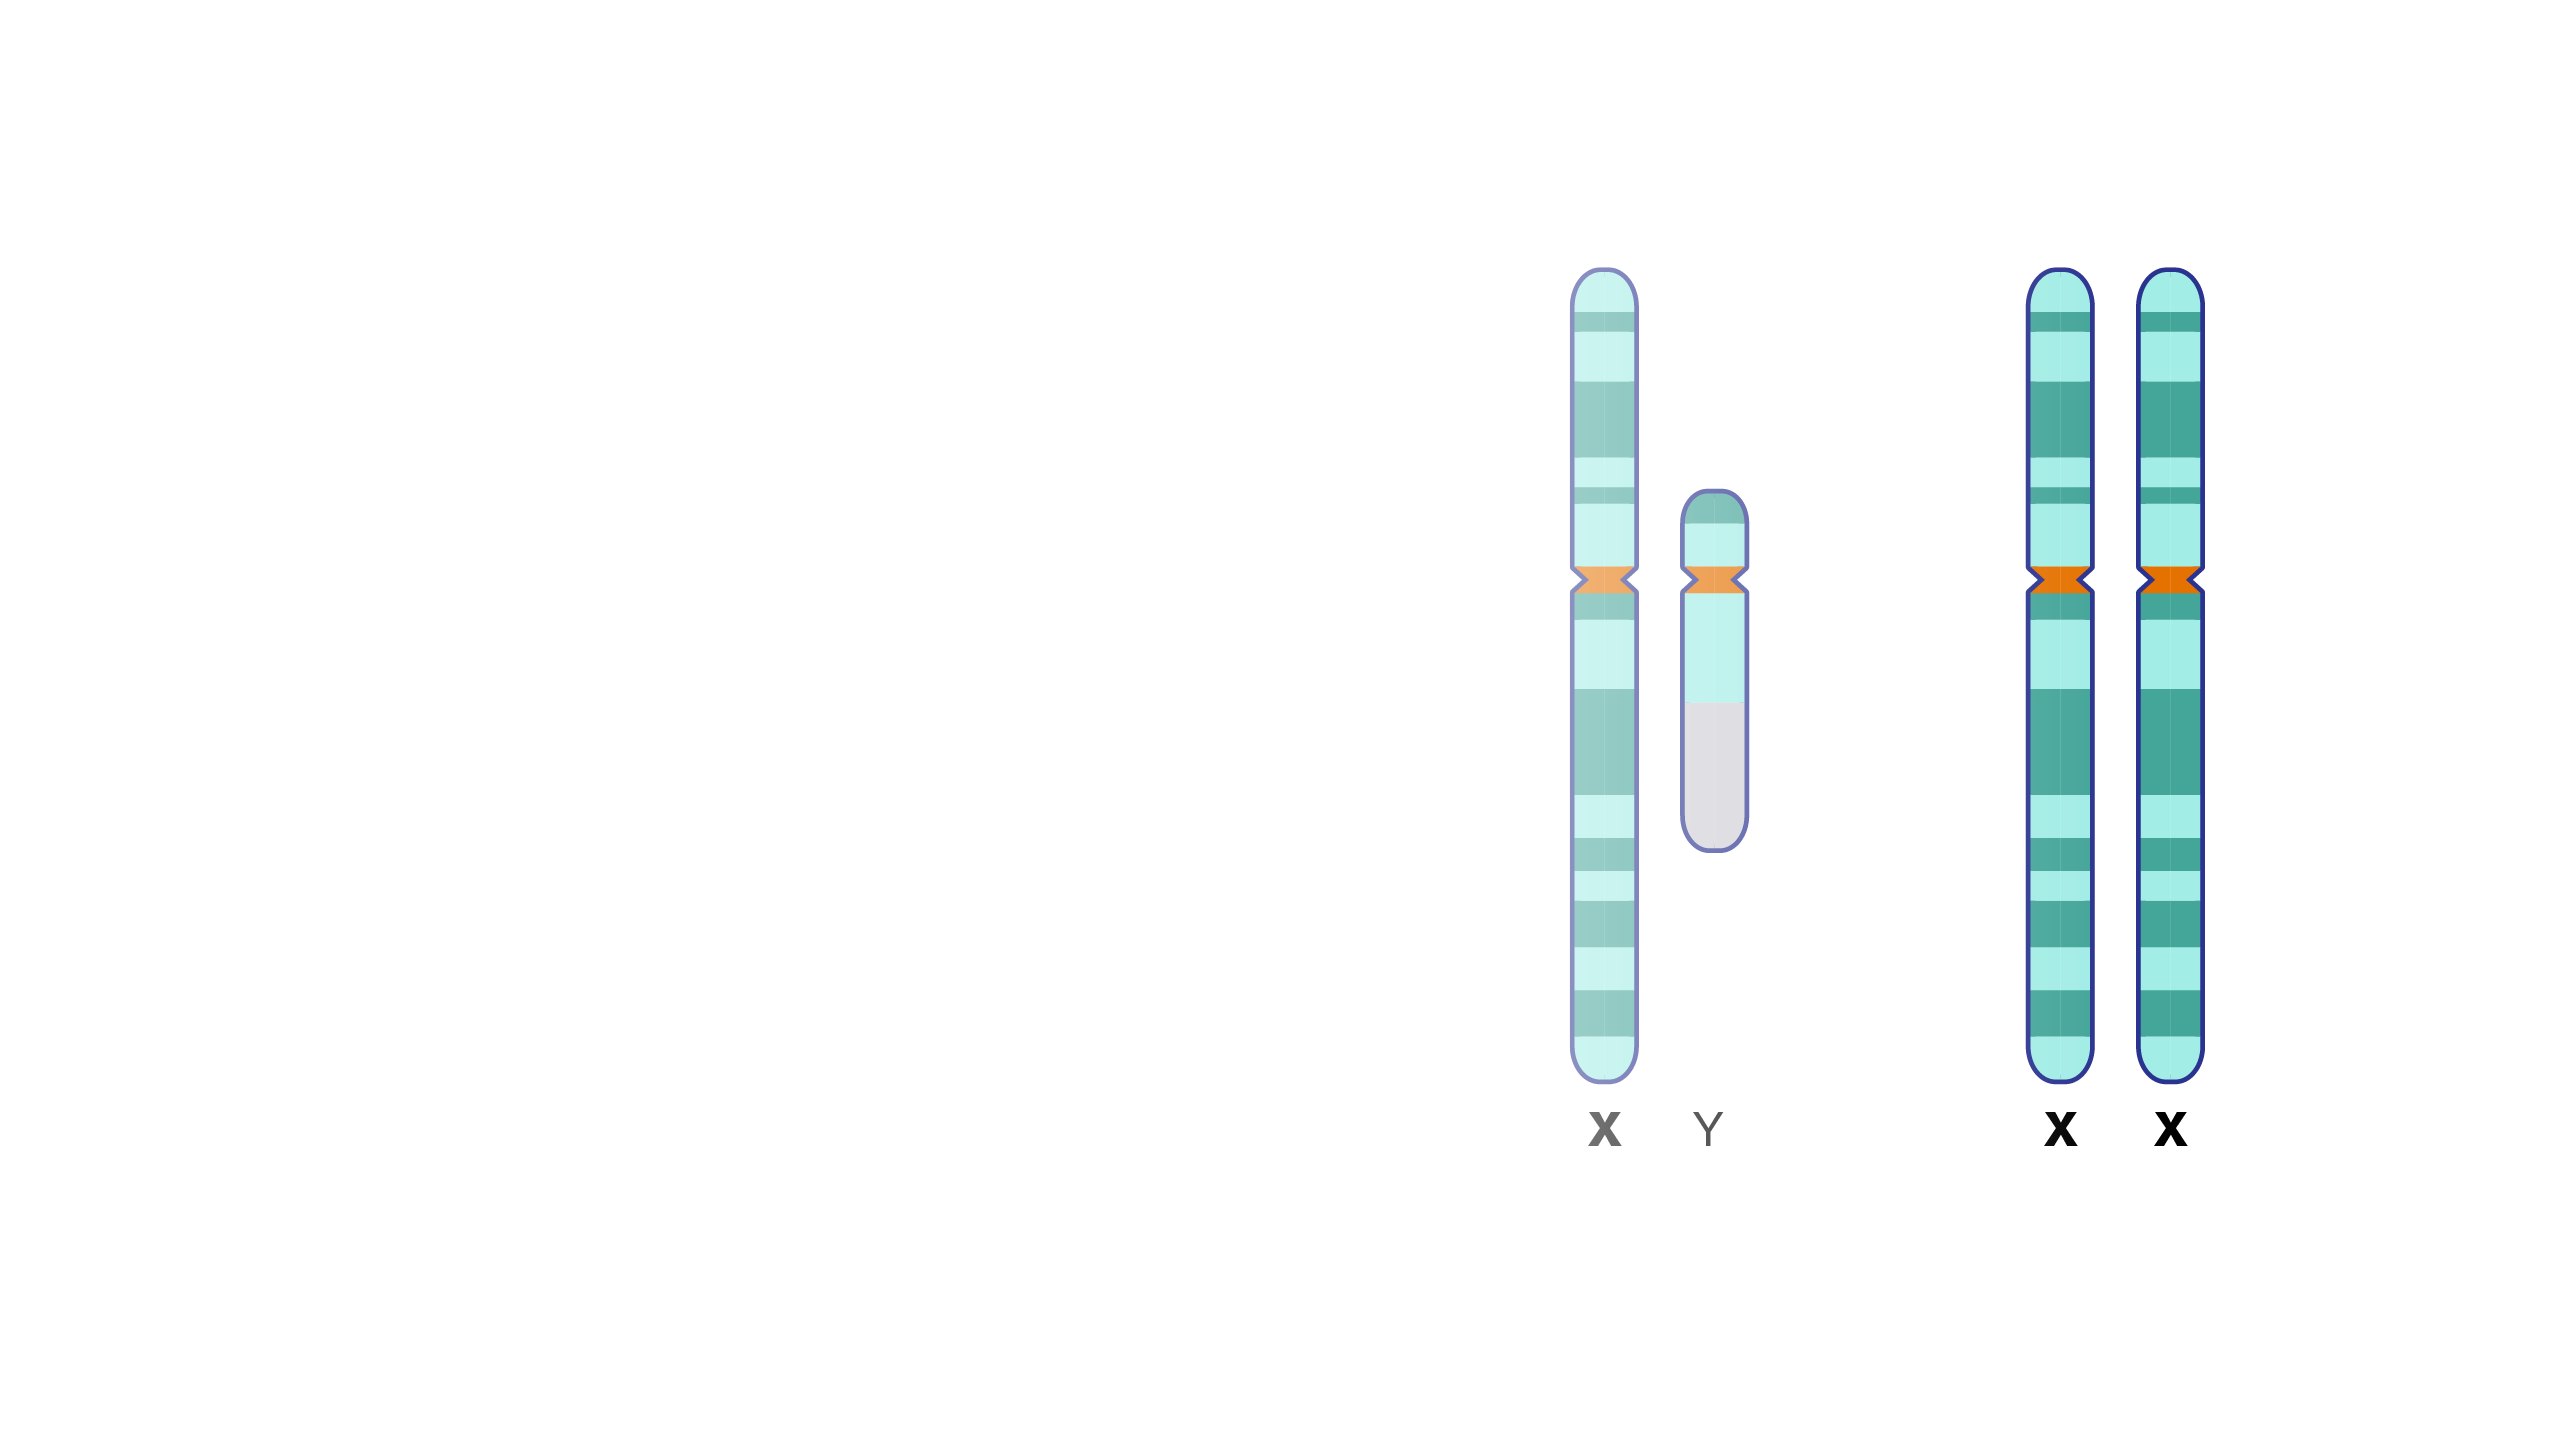 xy chromosome